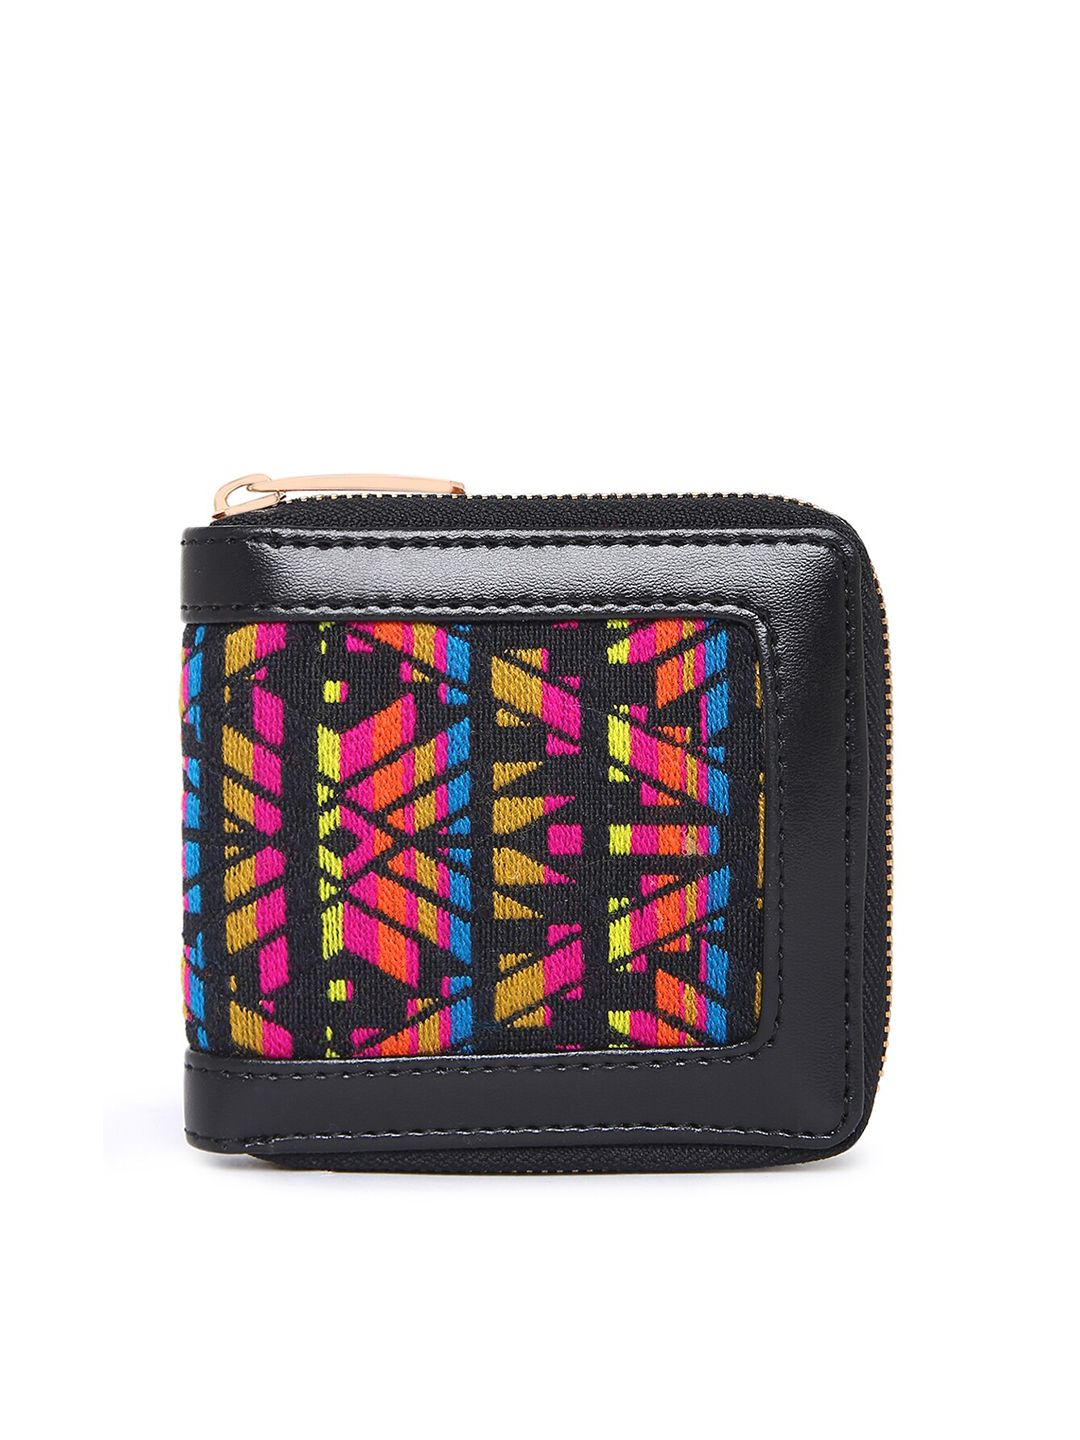 KLEIO Women Black & Pink Geometric Self Design Zip Around Wallet Price in India